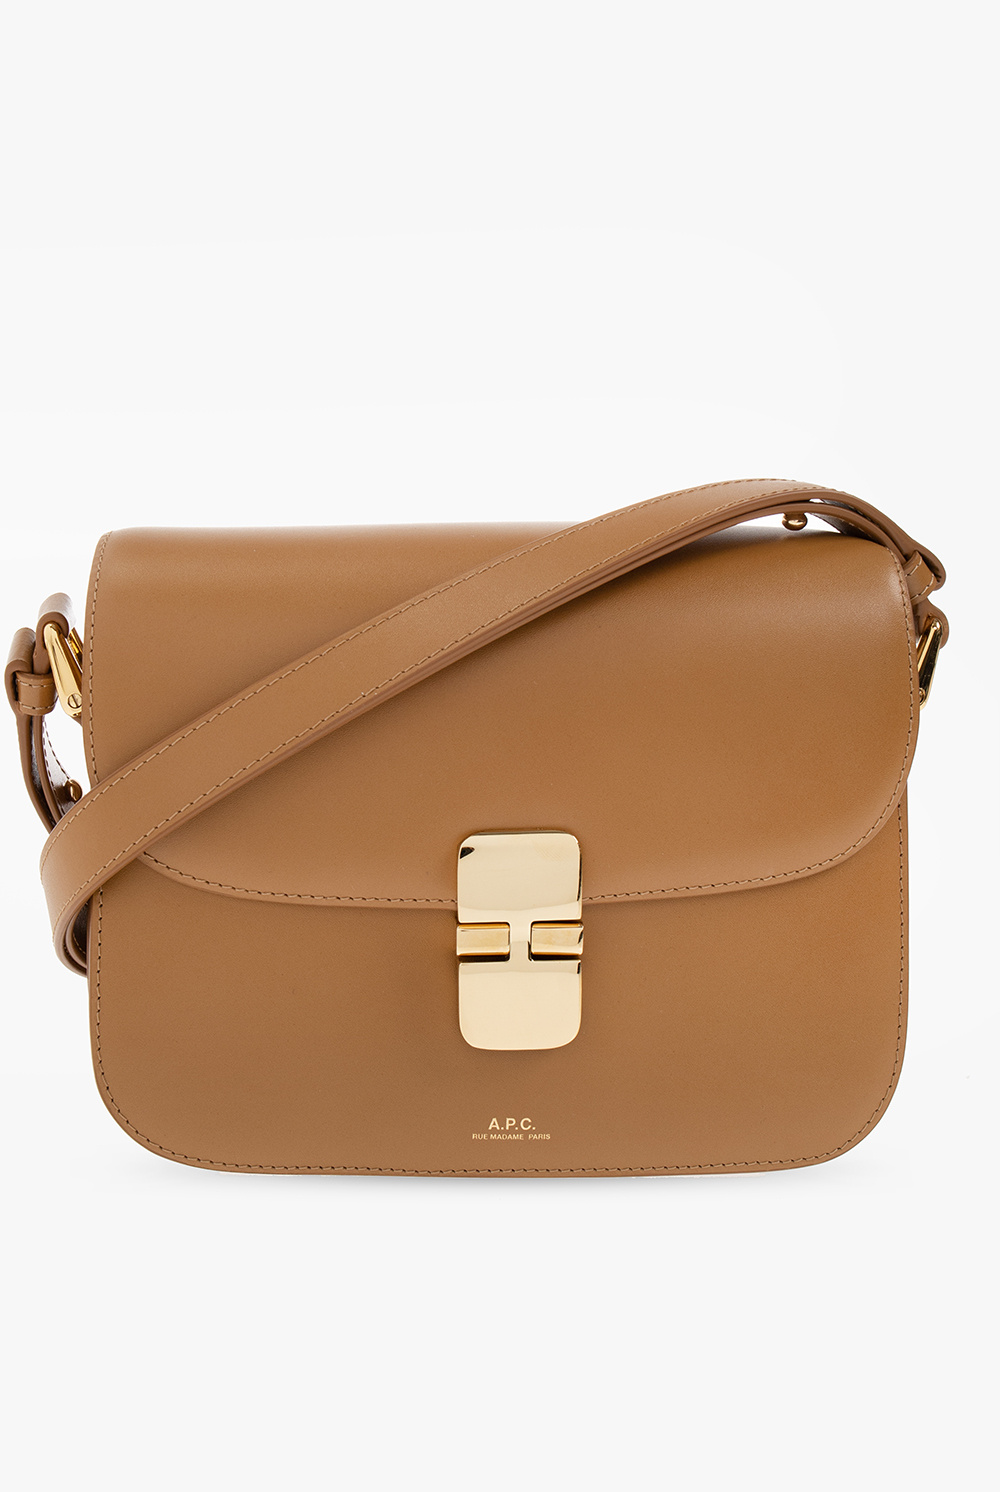 Brown ‘Grace Small’ shoulder bag A.P.C. - Vitkac GB